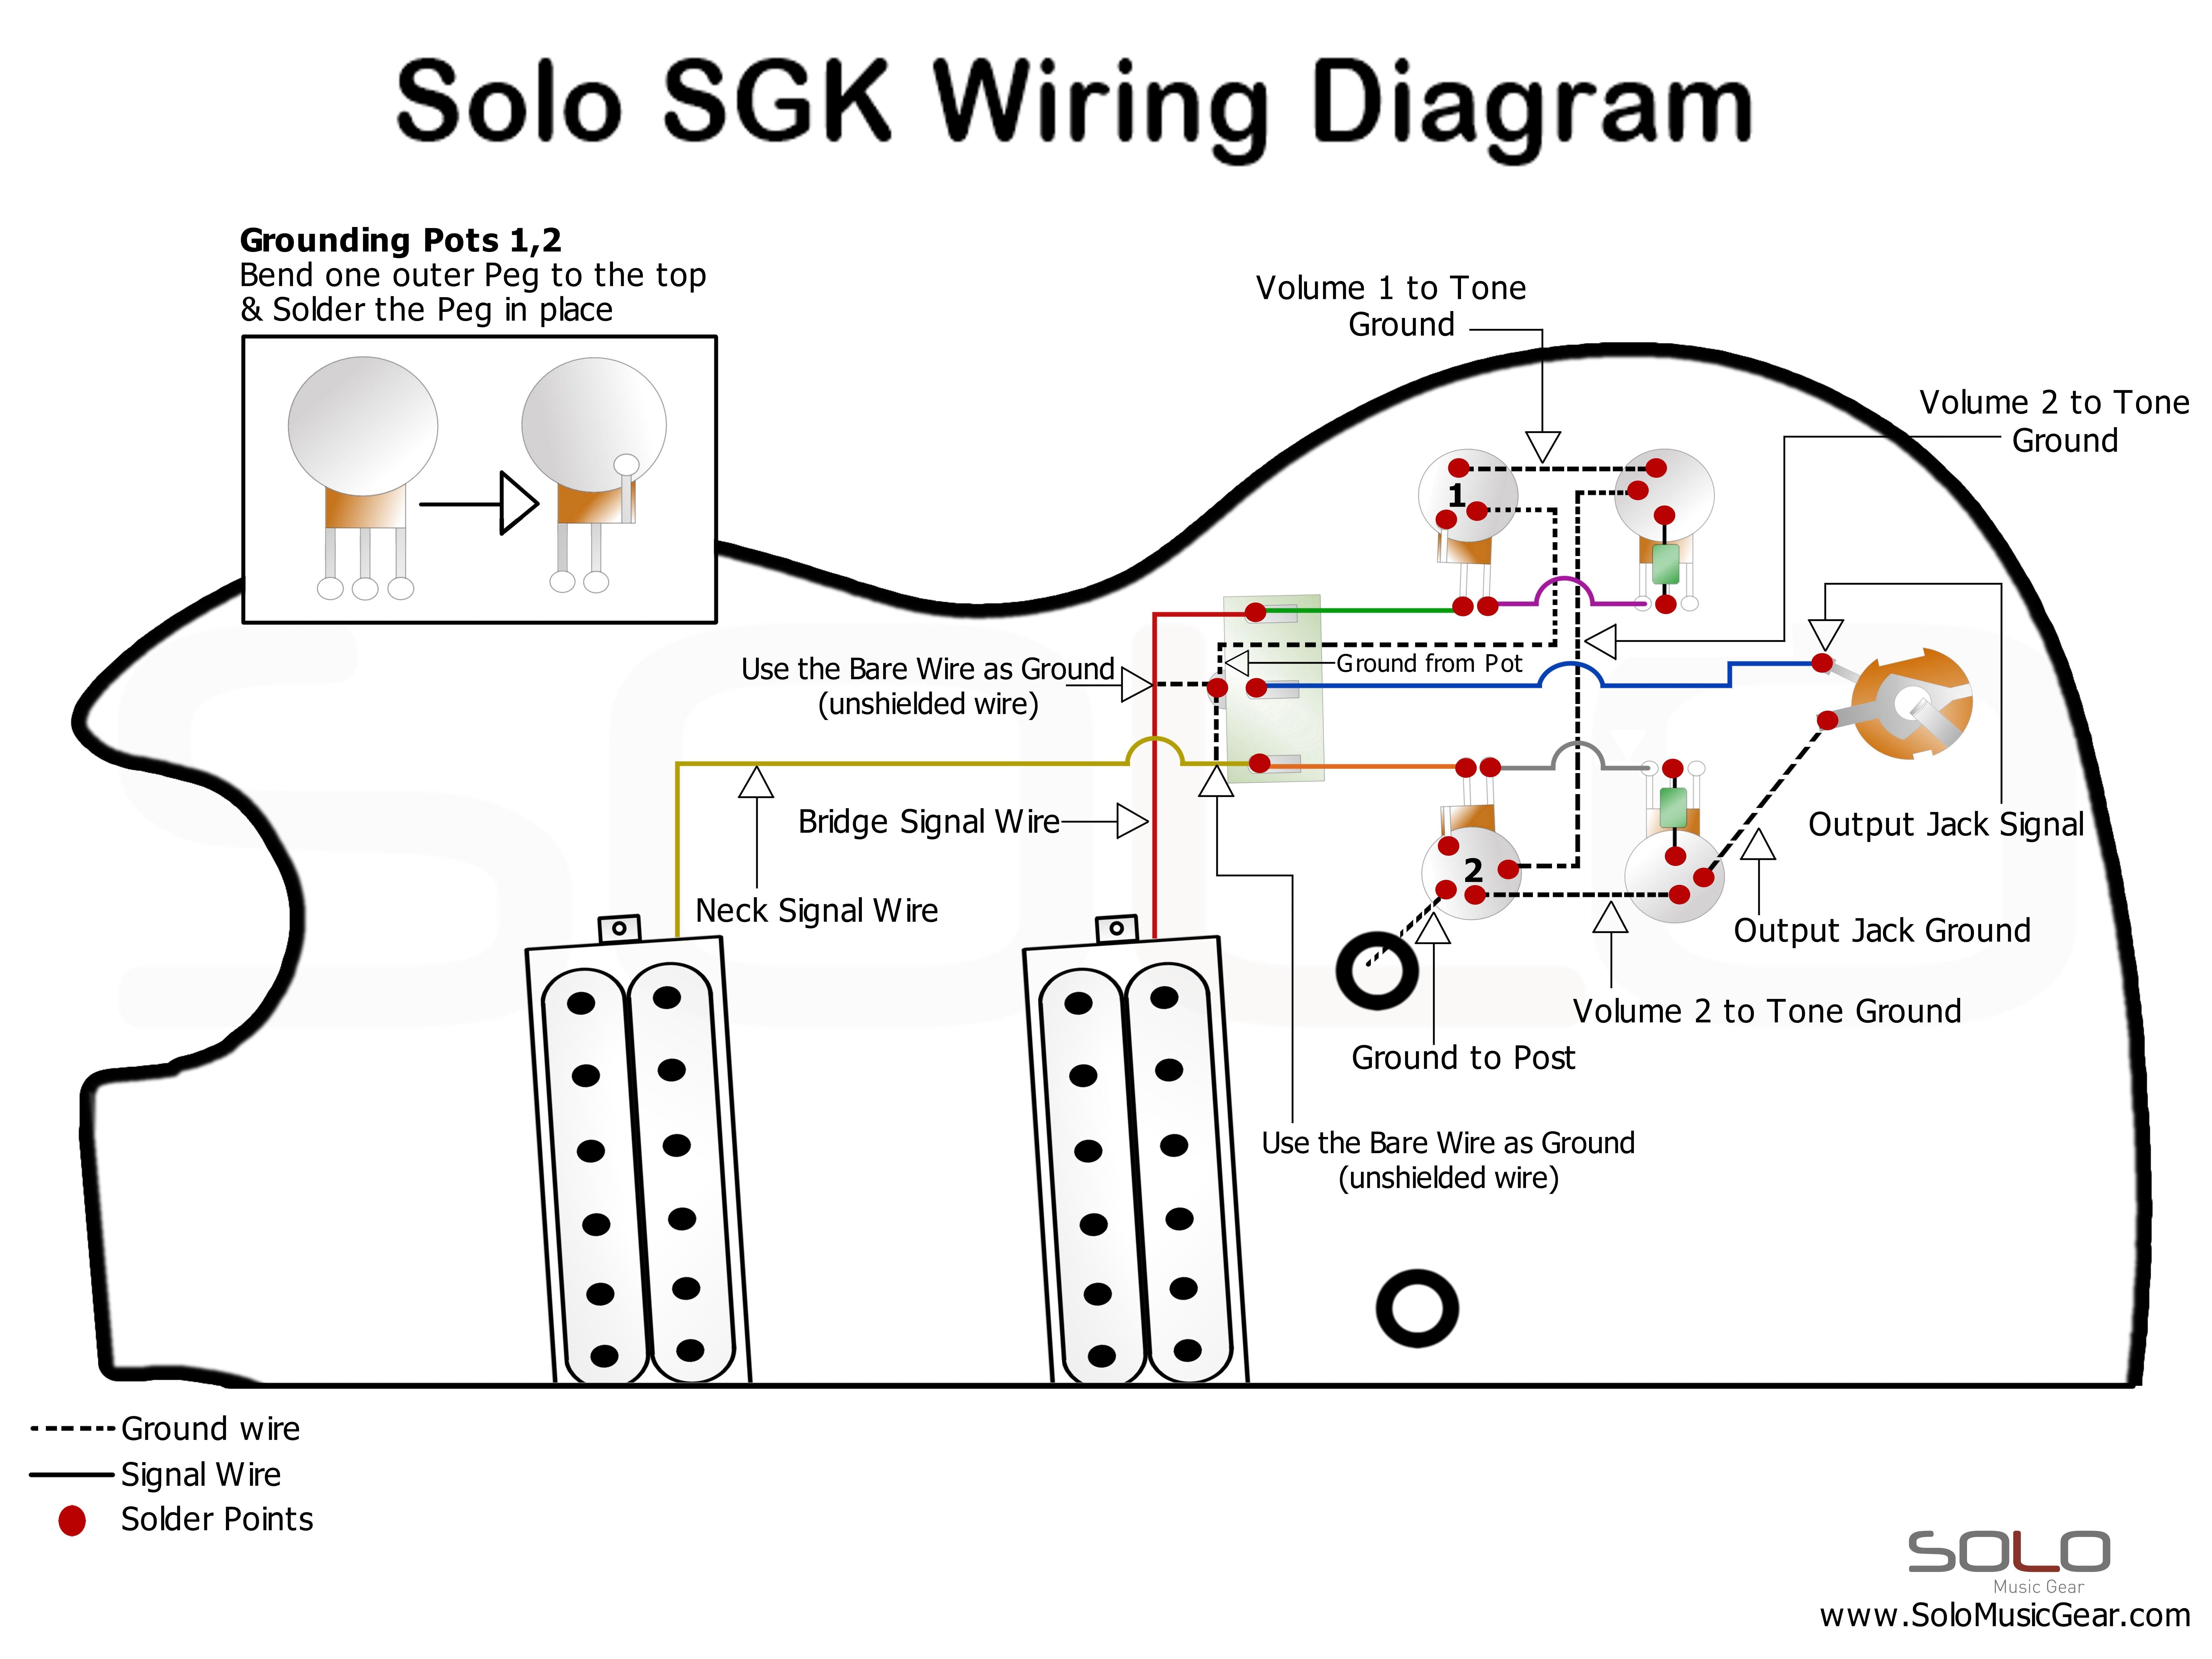 Mosrite Guitar Wiring Diagram Save Mosrite Guitar Wiring Diagram New Wiring Diagram Yamaha Guitar Free